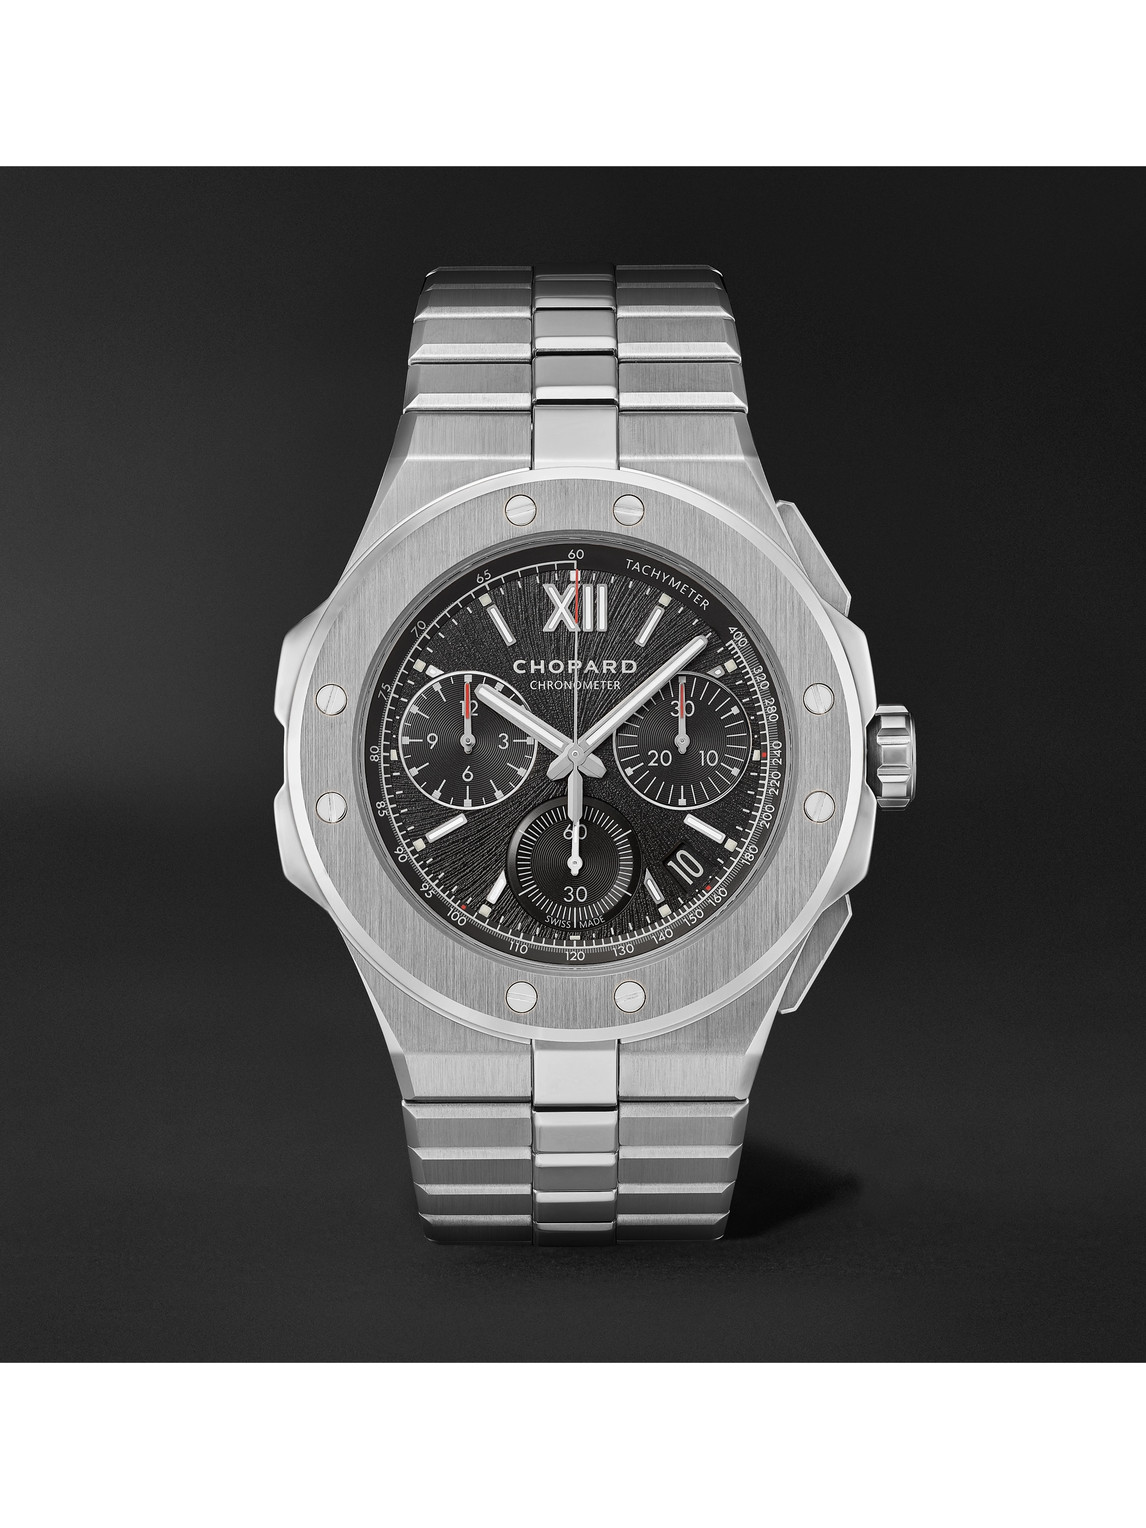 Chopard Alpine Eagle Xl Chrono Automatic 44mm Lucent Steel Watch, Ref. No. 298609-3002 In Black